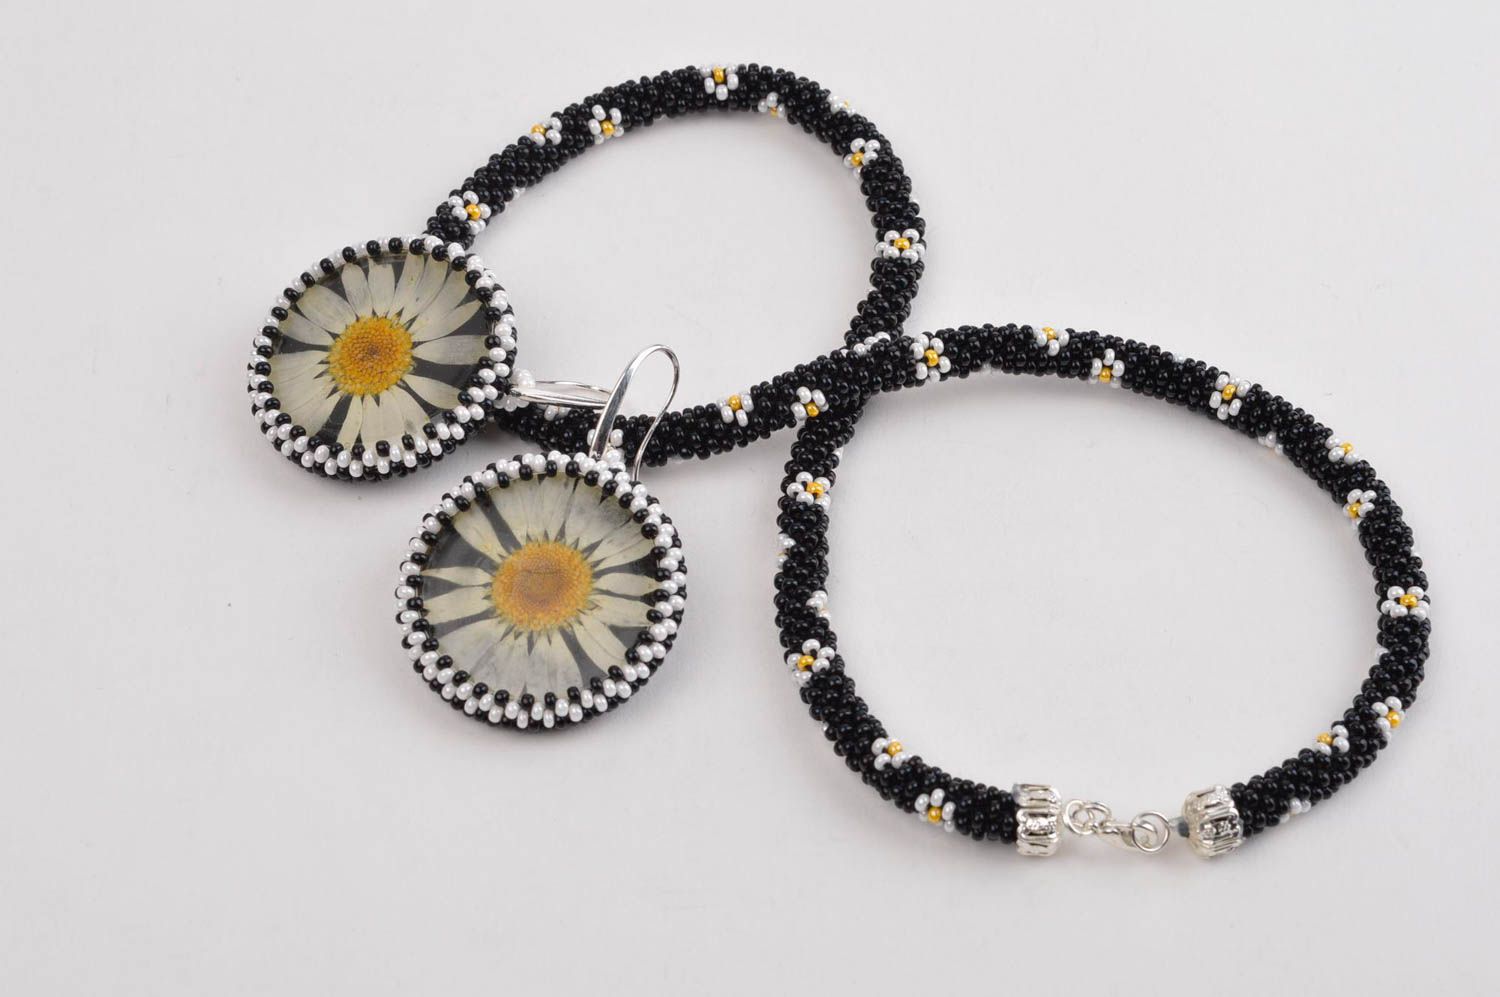 Handmade earrings designer jewelry gift ideas unusual beaded cord gift for women photo 2